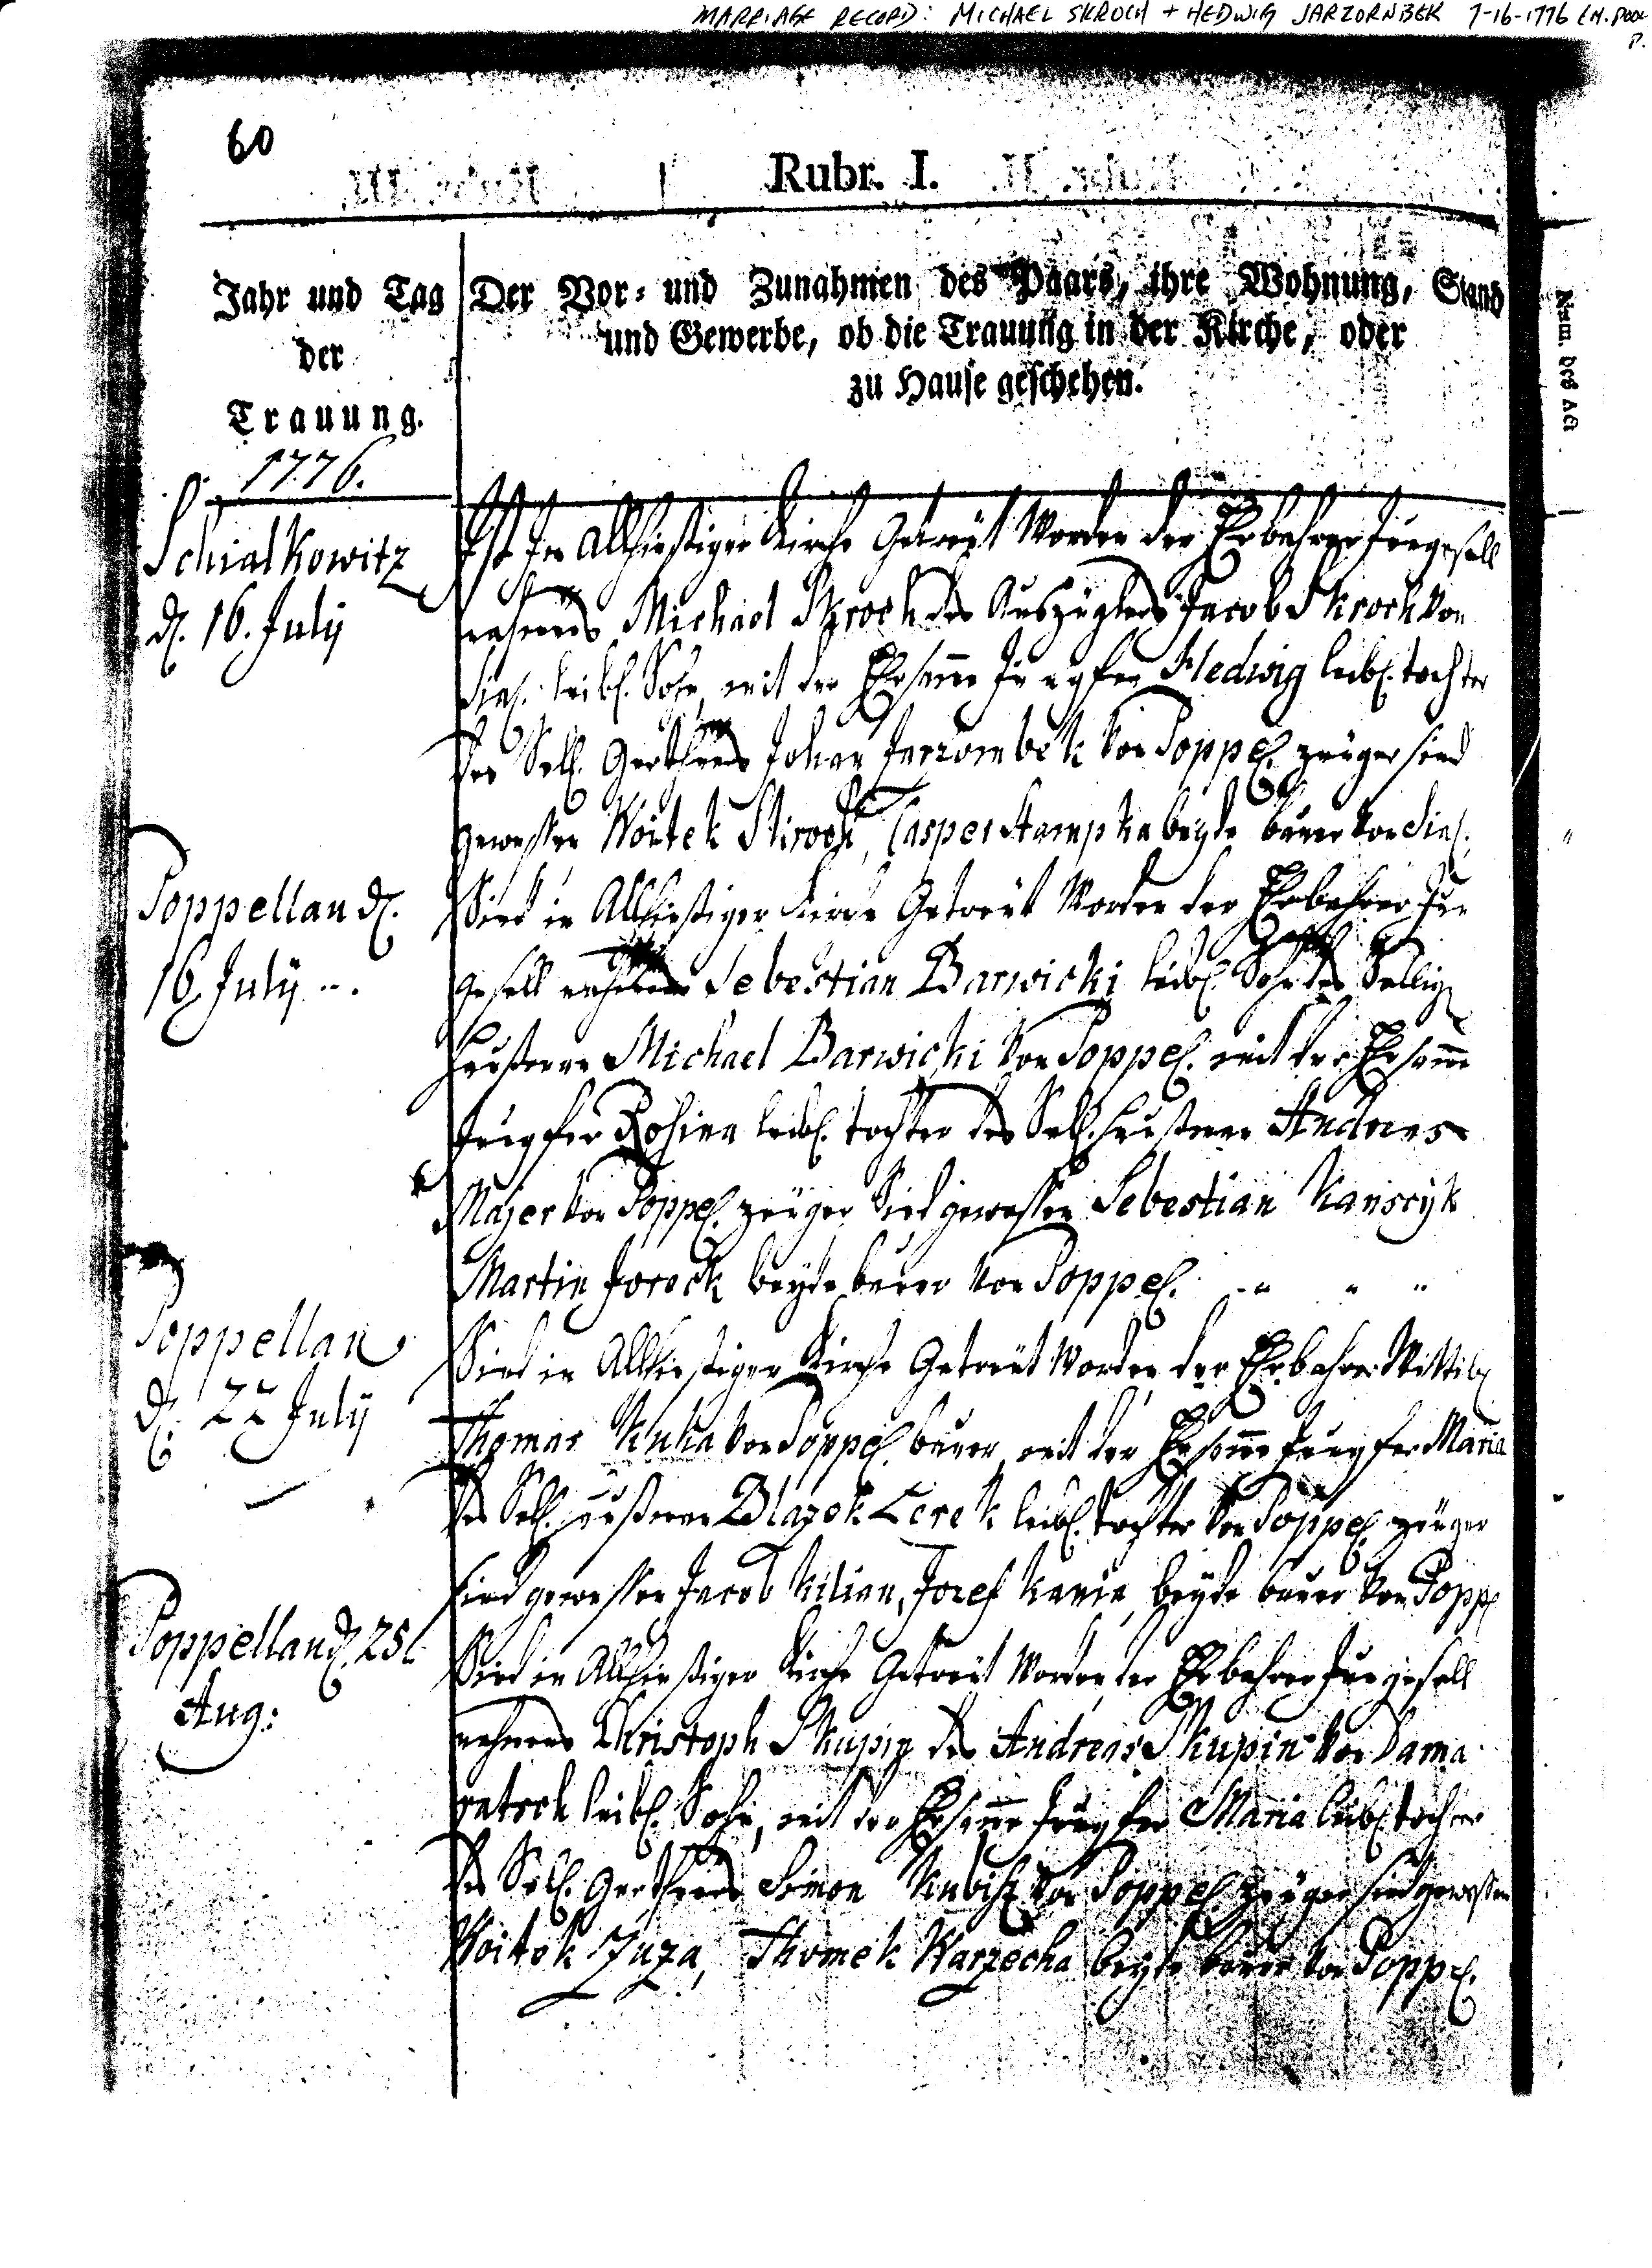 Michael_Skroch and Hedwig Jarzornbek 1776
                    Marriage 1